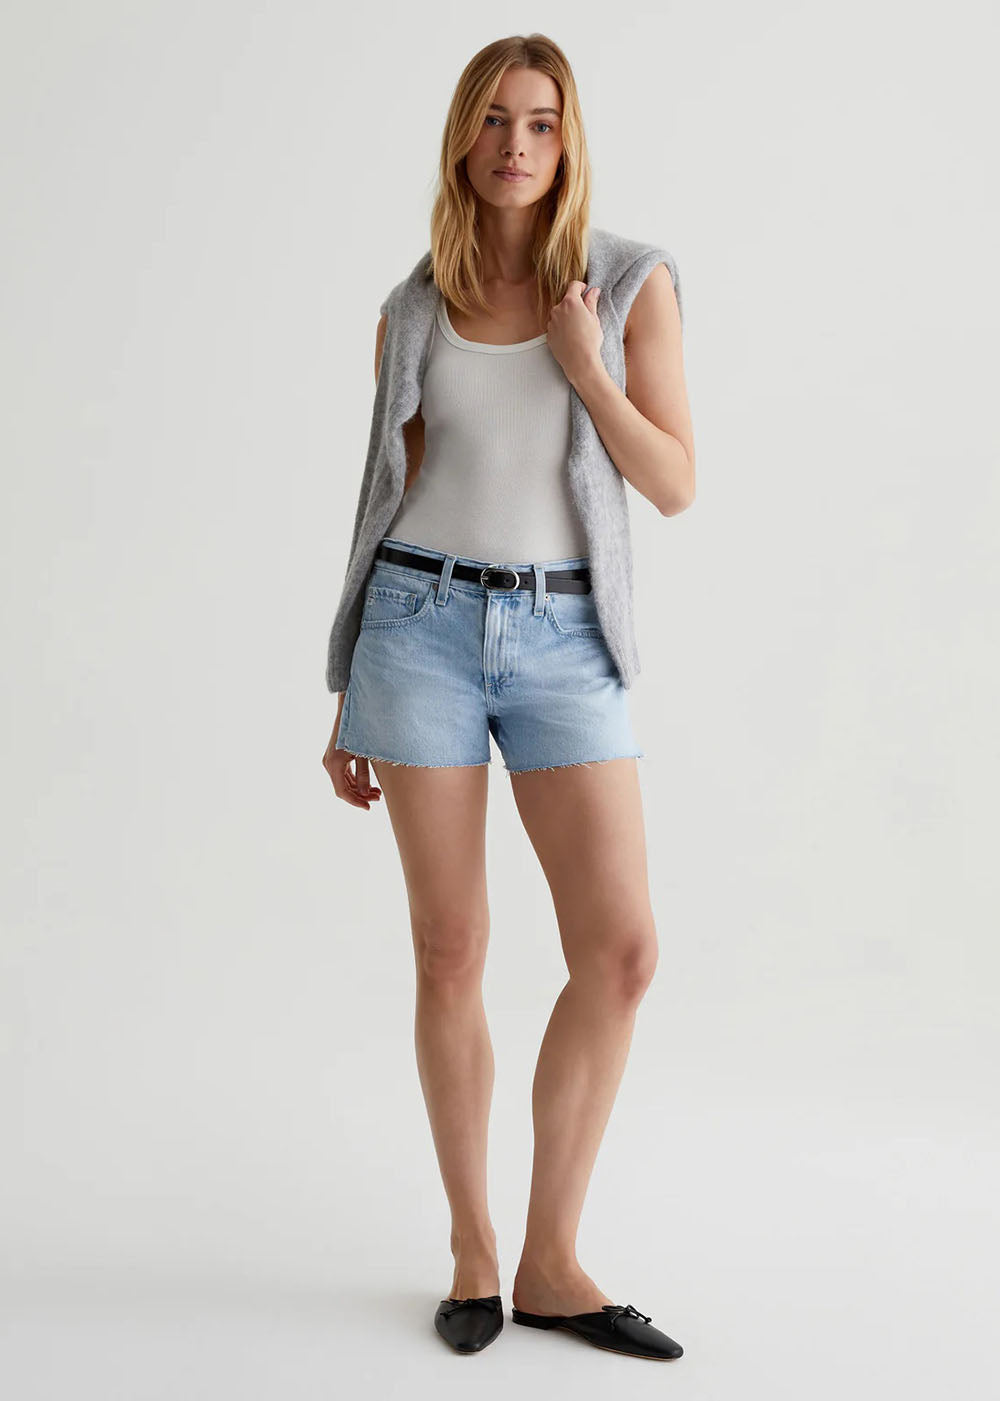 Hailey Cut Off Jean Shorts - Recall - AG Jeans Canada - Danali - SGM1714SVRCAL